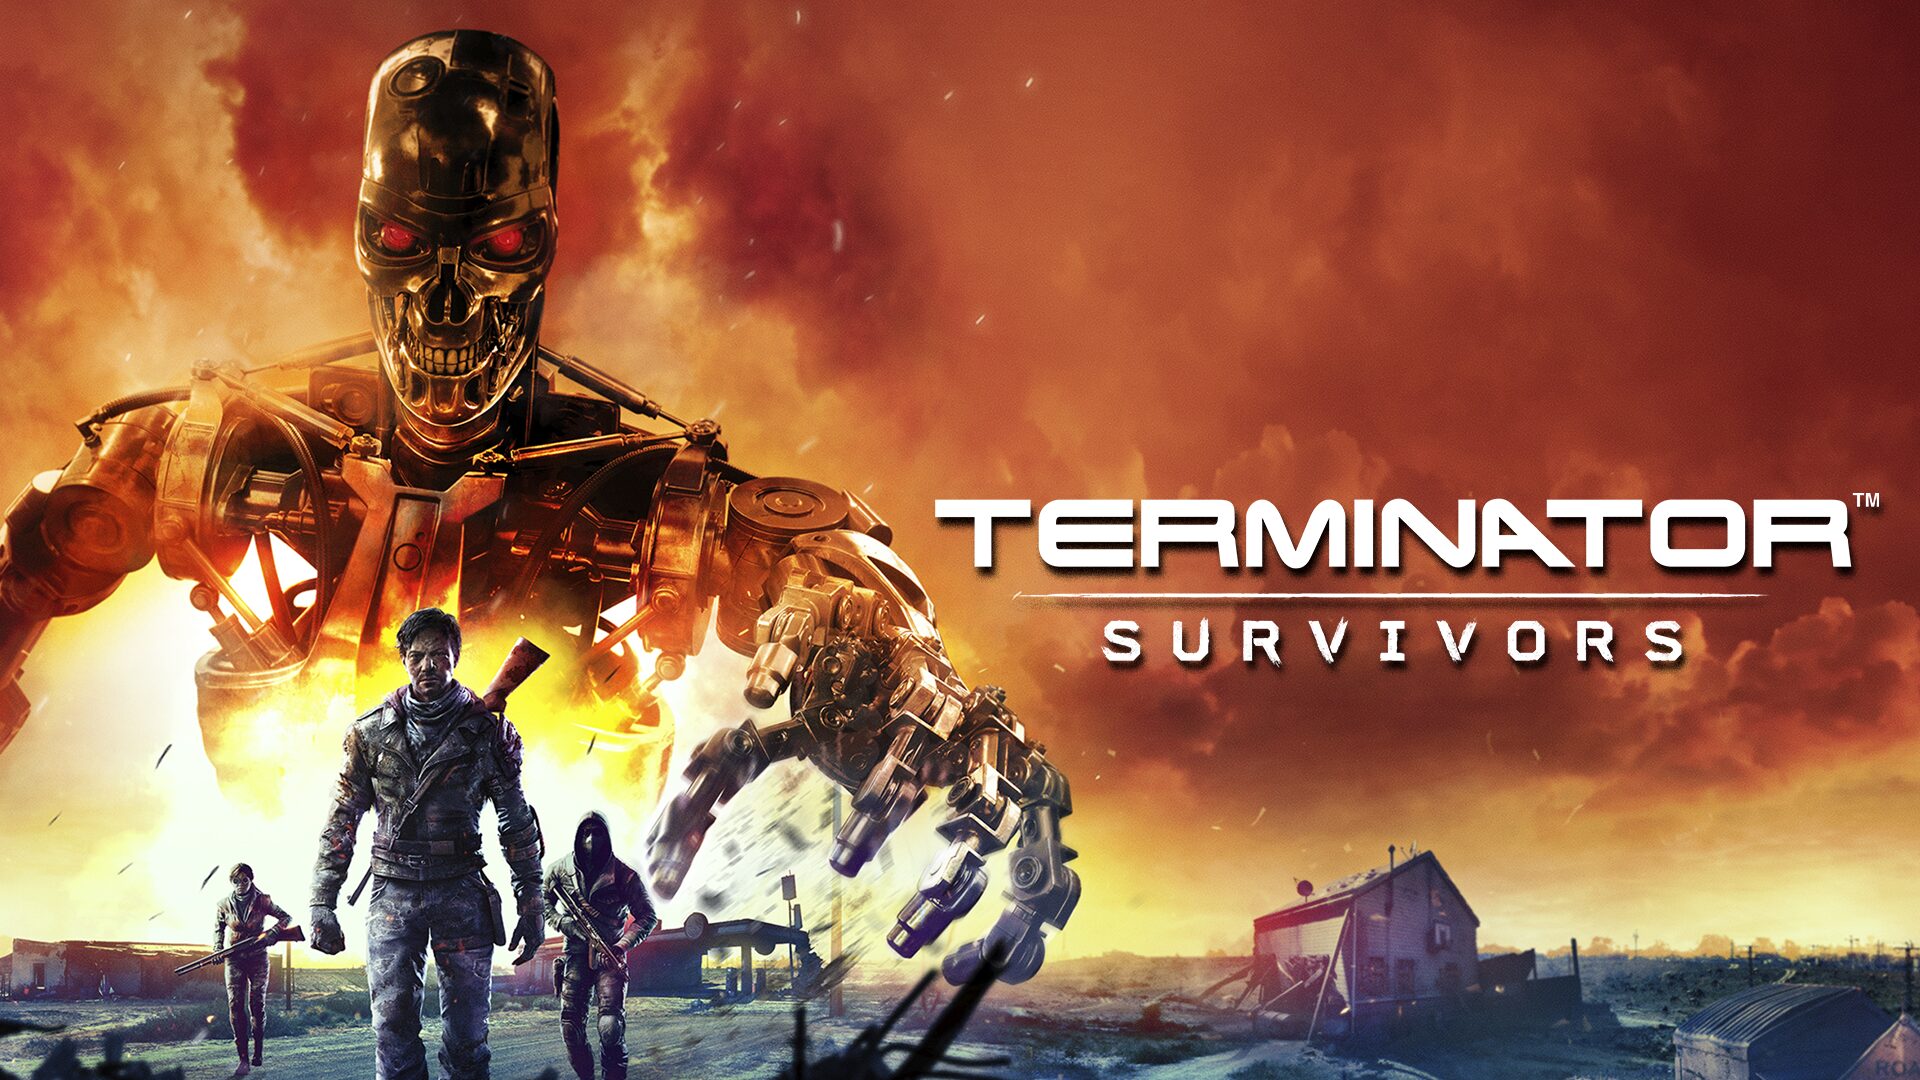 Nacon announces release date for open-world Terminator game Terminator: Survivors on PC